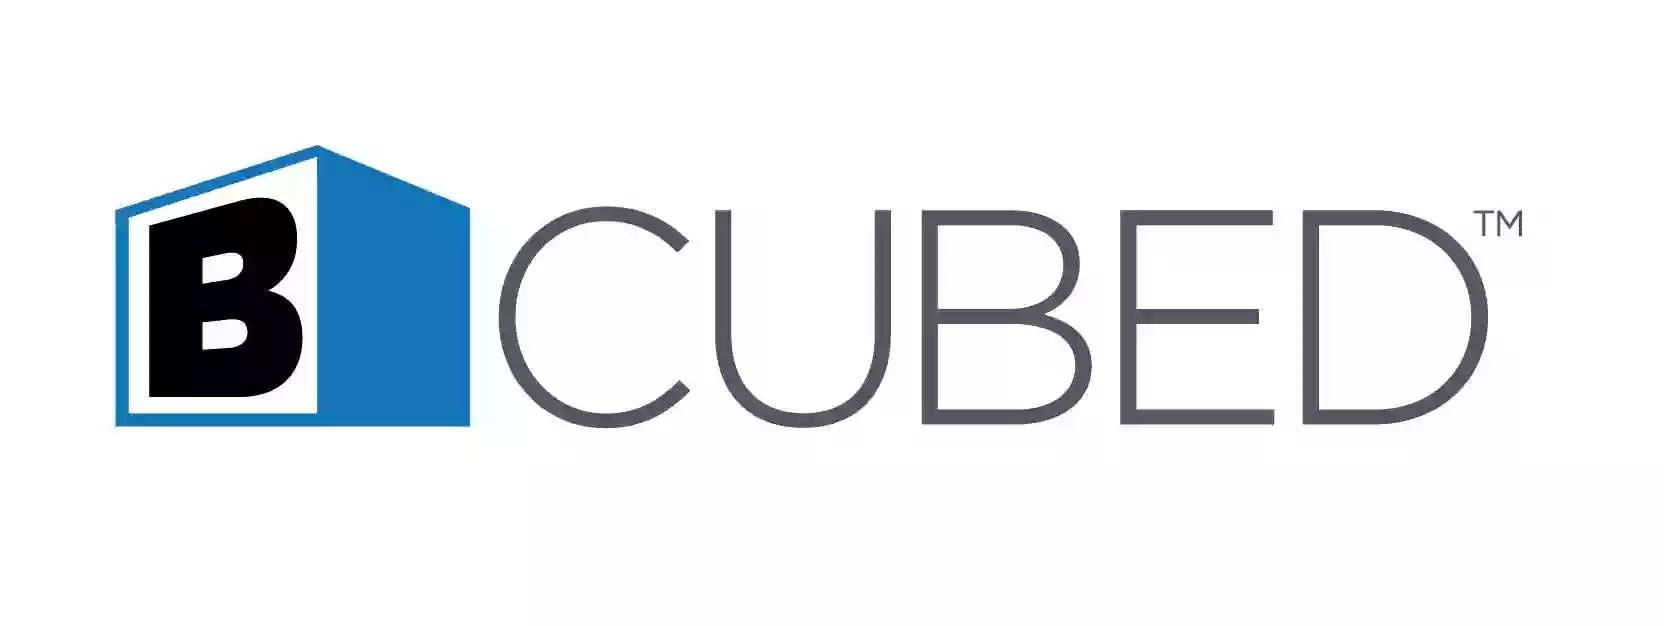 B Cubed Shipping, LLC